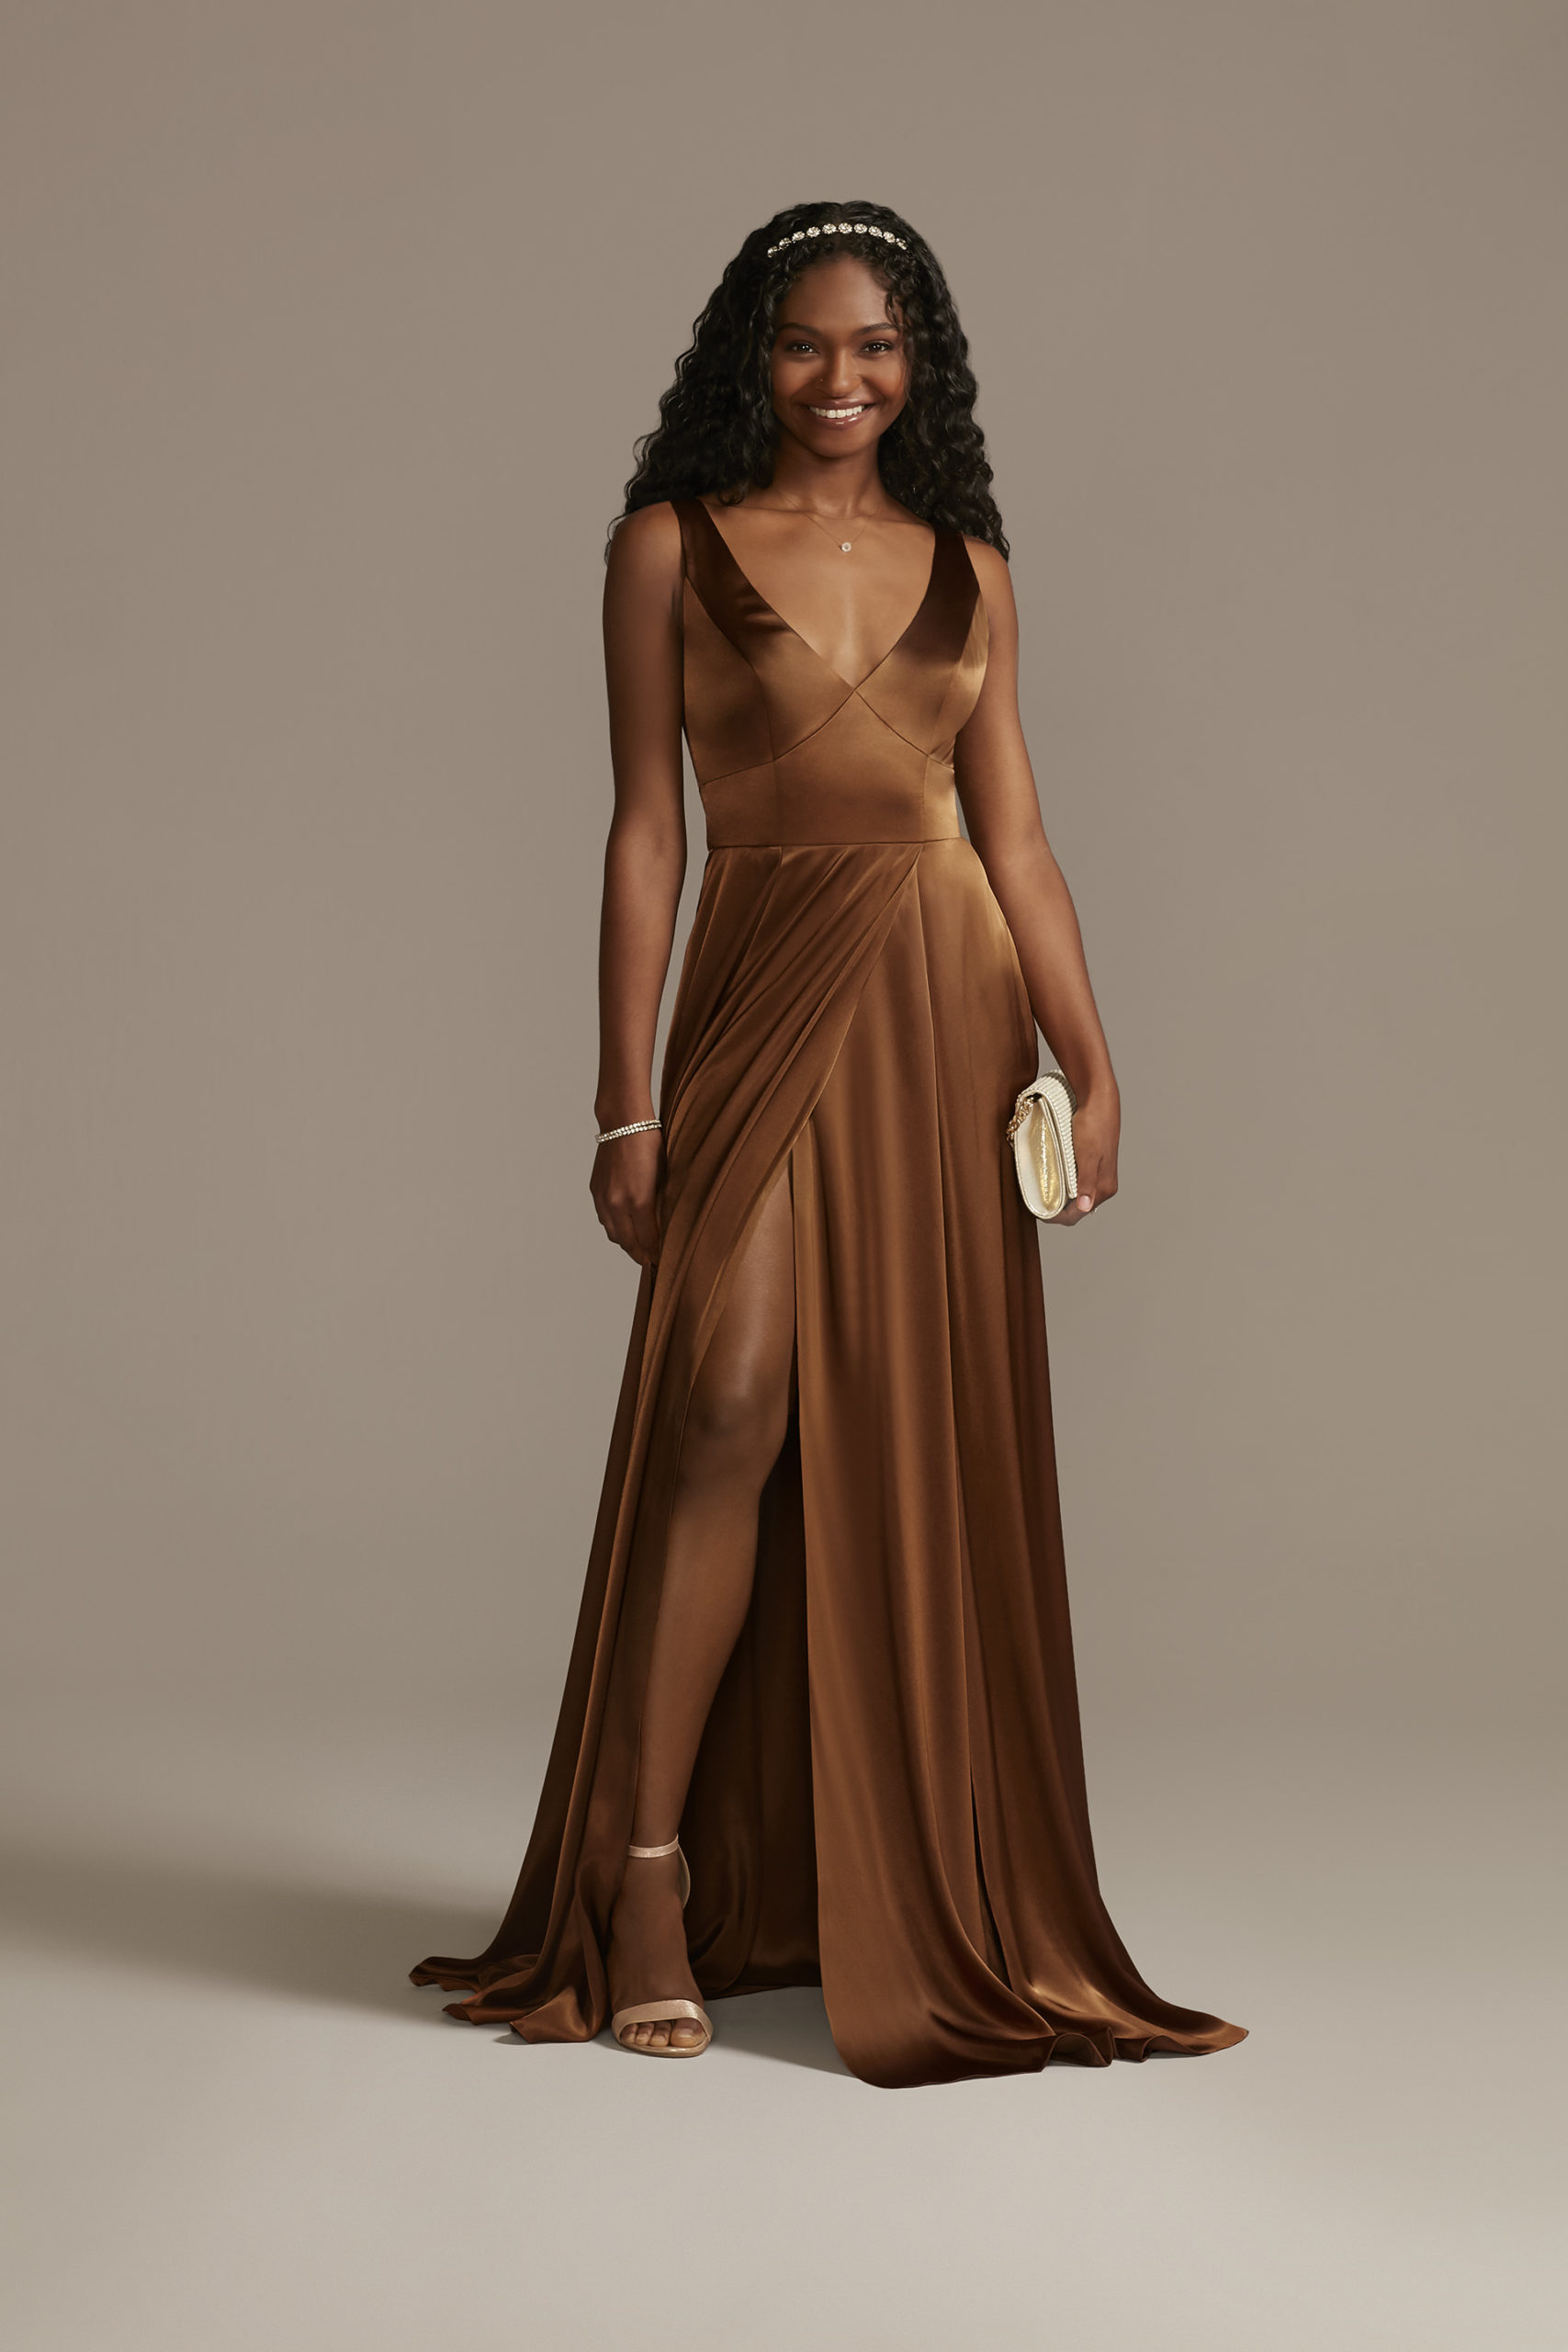 woman wearing brown bridesmaid dress